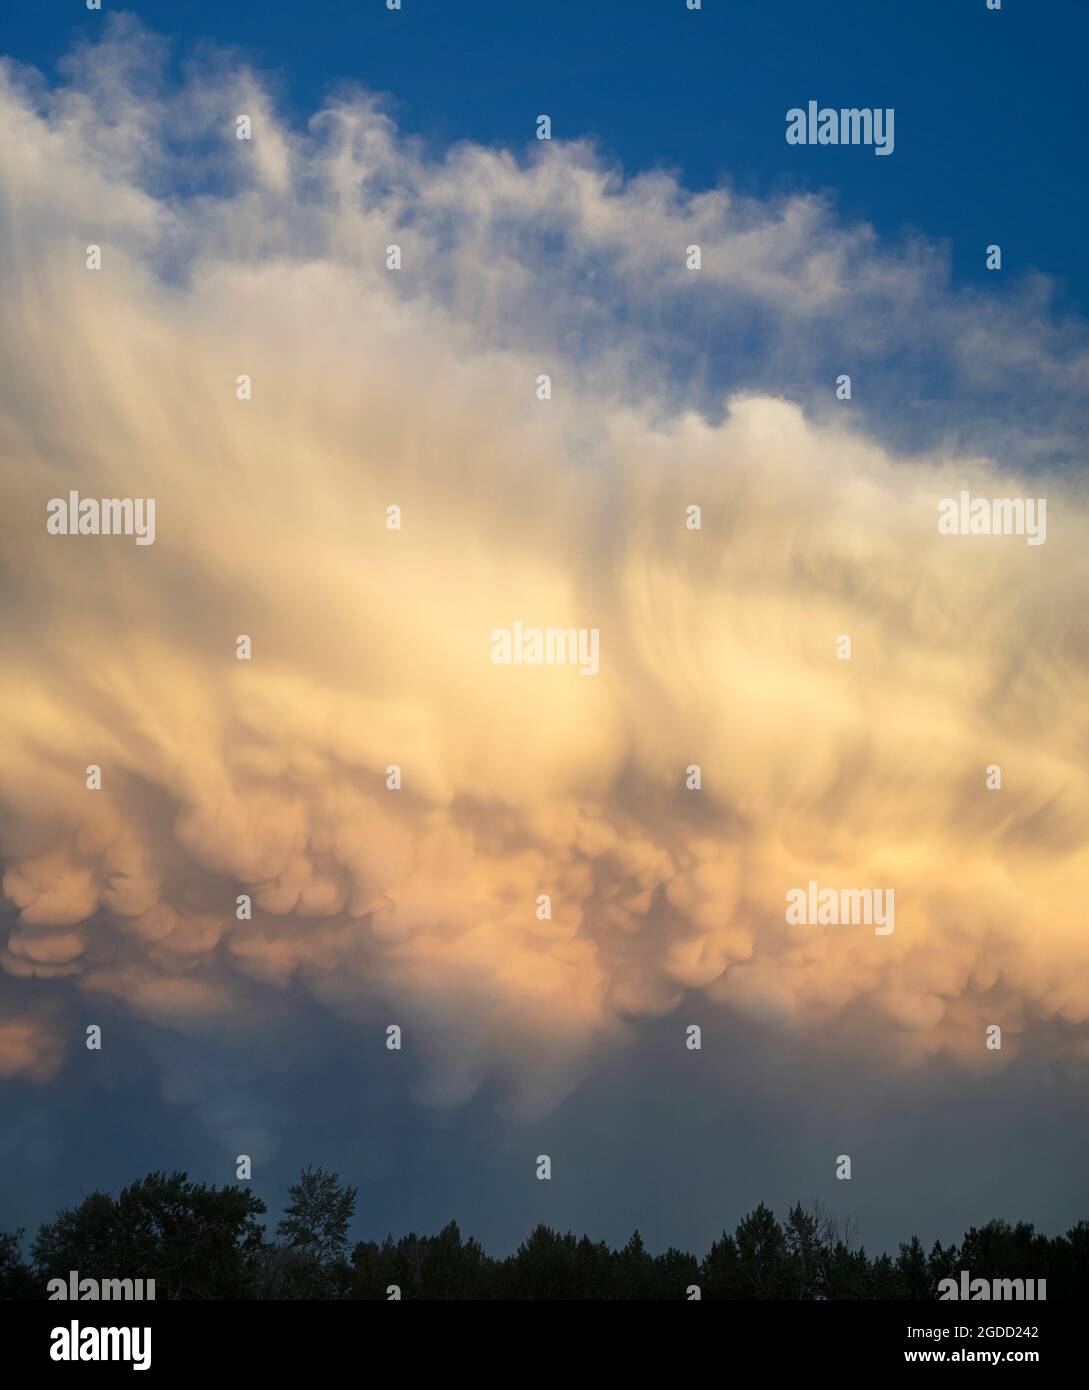 Sonnenbeschienene Cumulonimbus-Sturmwolken über Mammatuswolken in Calgary, Kanada Stockfoto